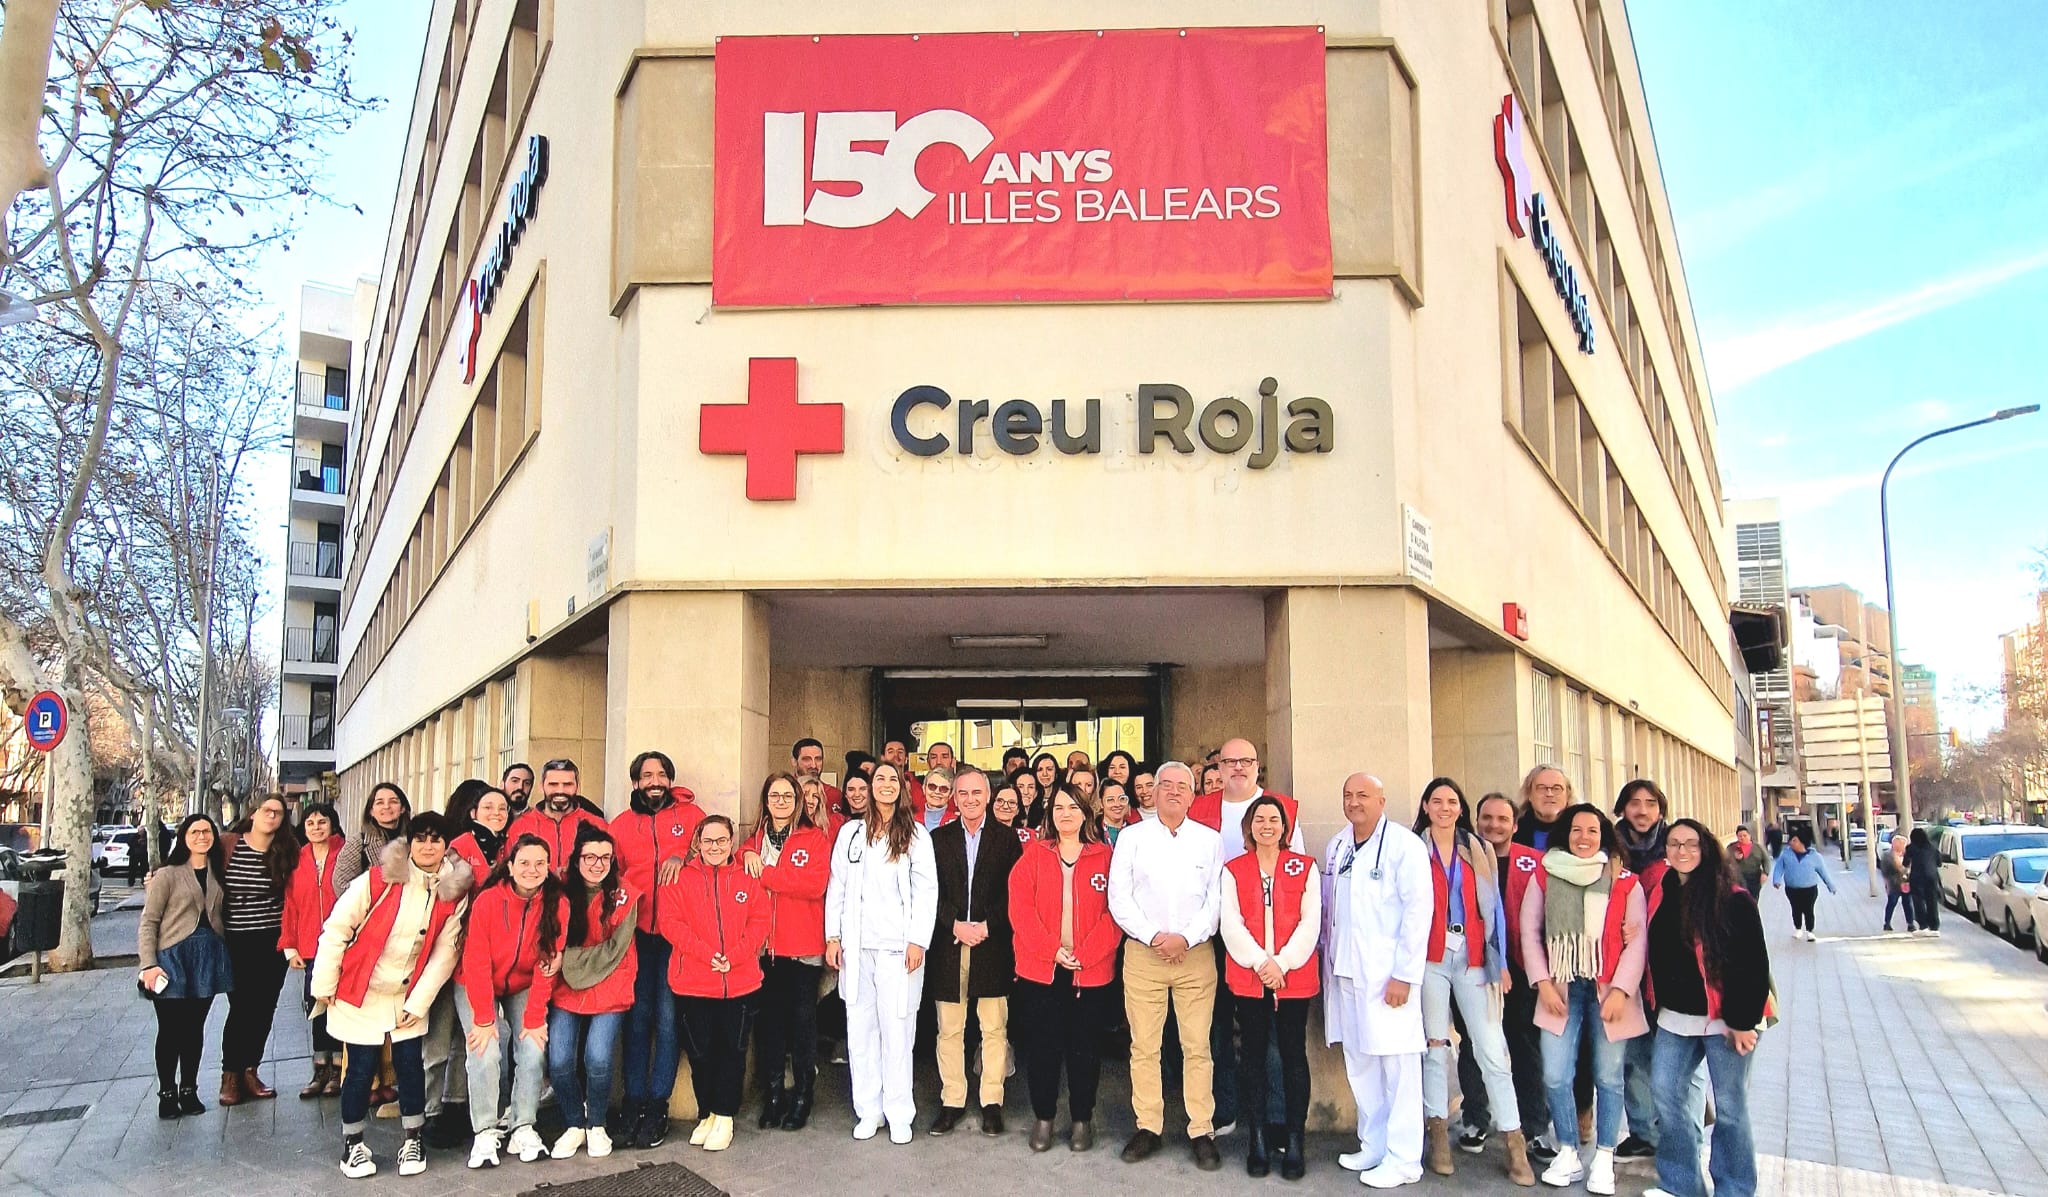 150 aniversari de Creu Roja Illes Balears